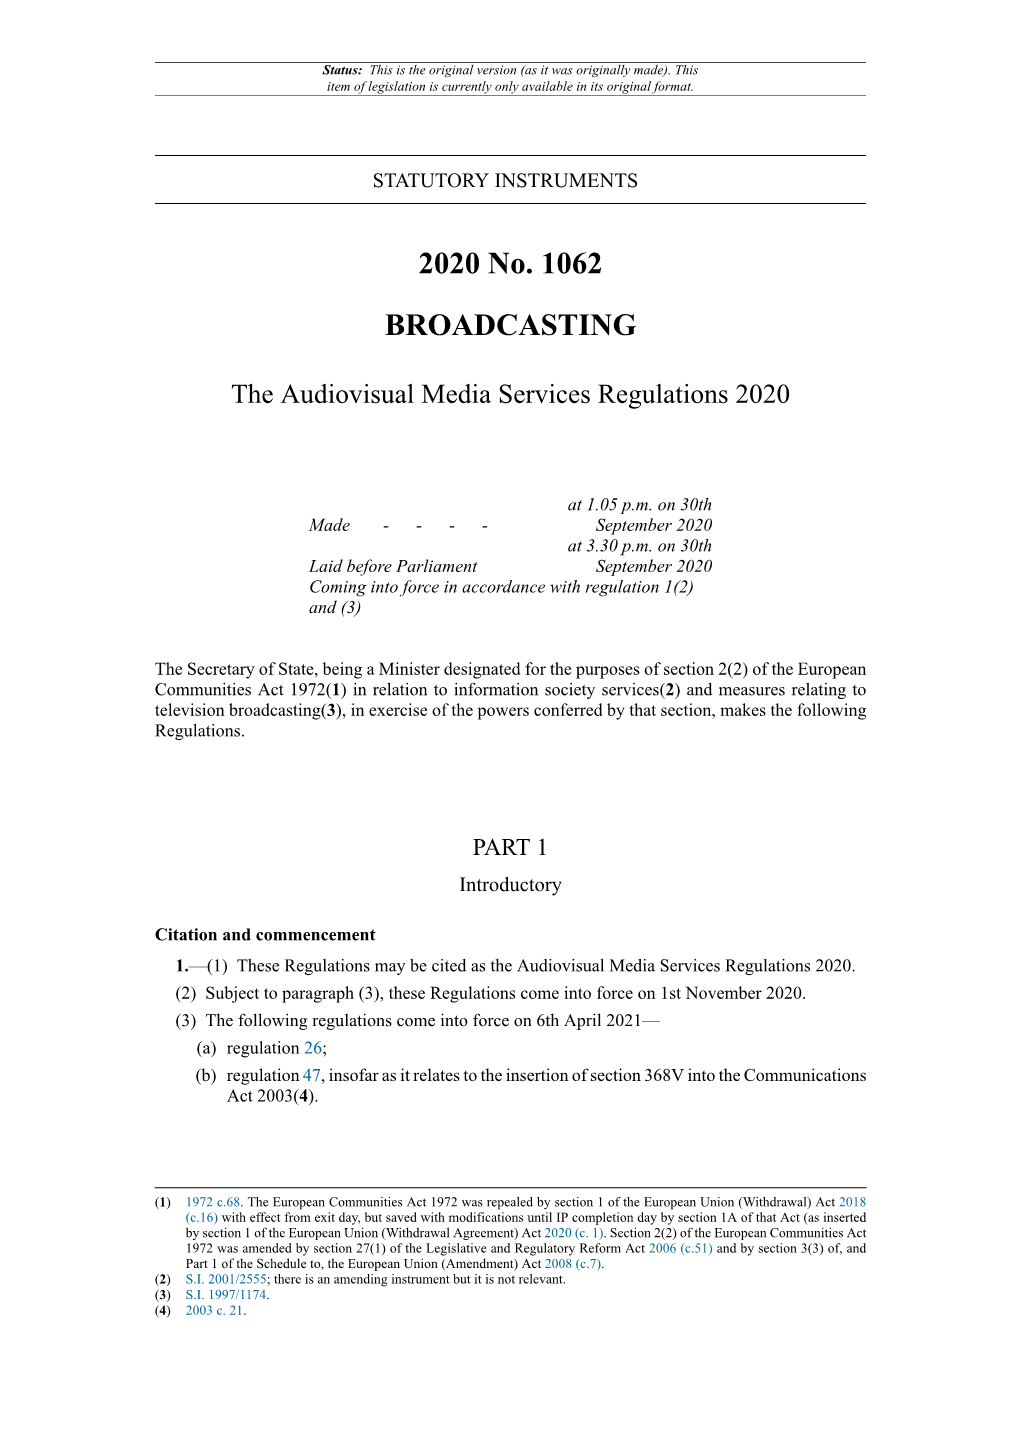 The Audiovisual Media Services Regulations 2020